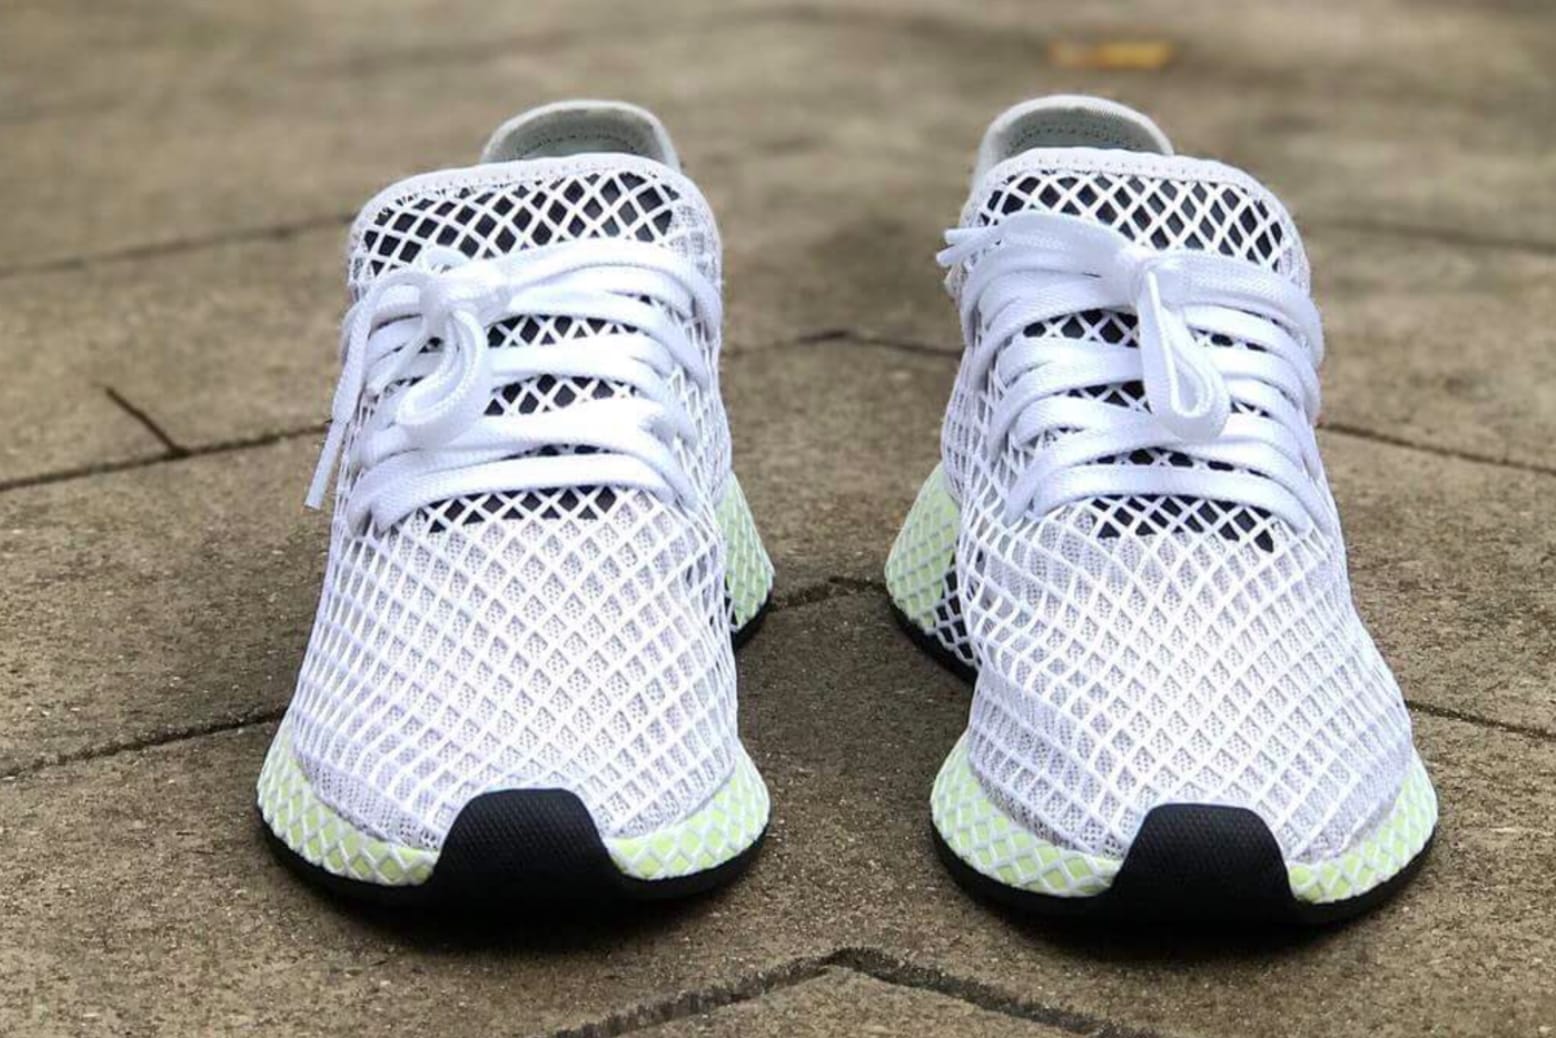 Adidas Deerupt Runner Review | Sneakers men fashion, Sneakers fashion, Adidas  deerupt